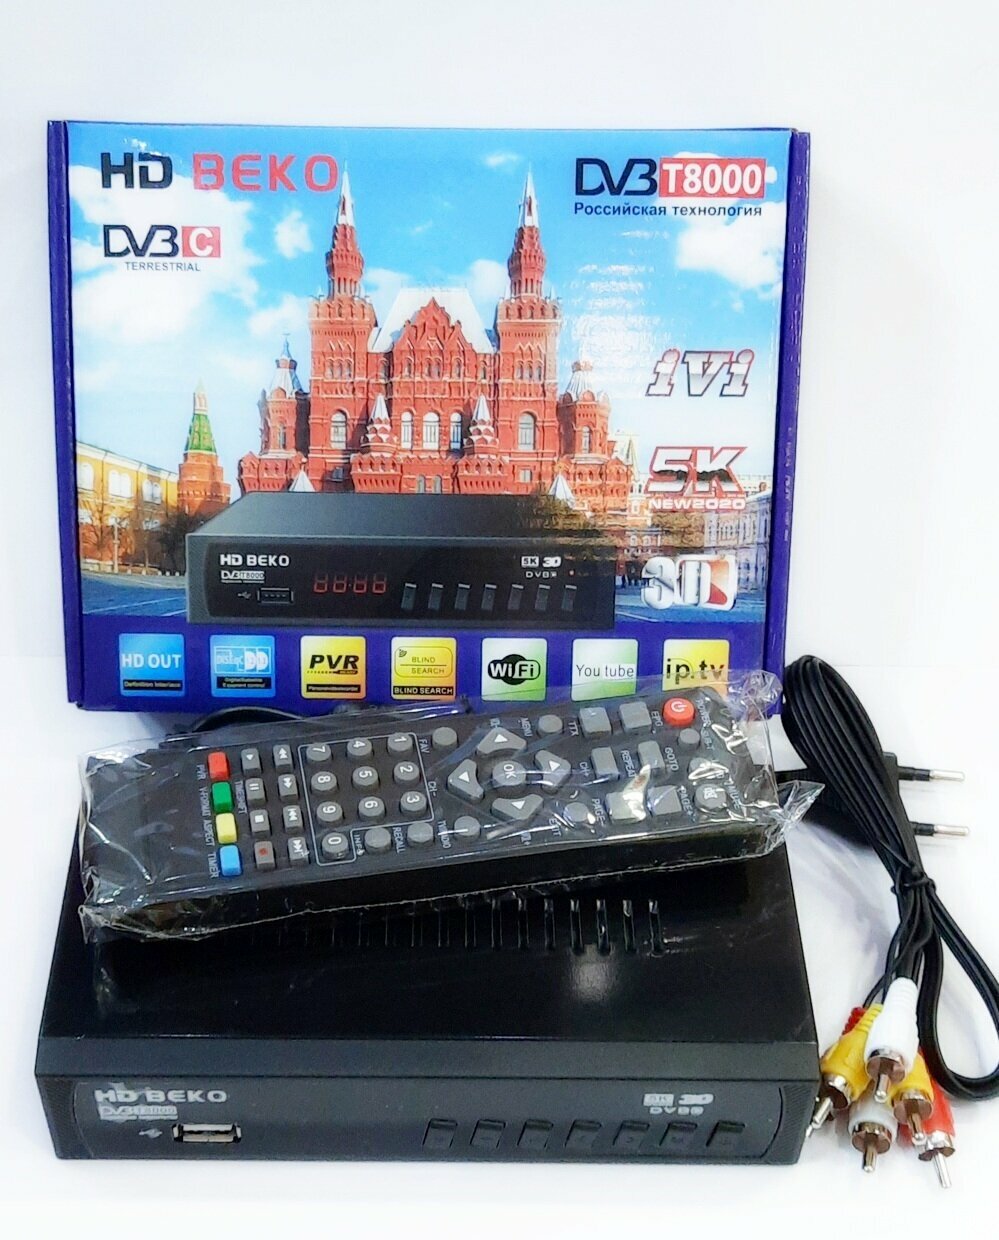 Цифровая ТВ приставка HD BEKO DVB T8000 DVB-T2/С (черный) приставка цифрового телевидения